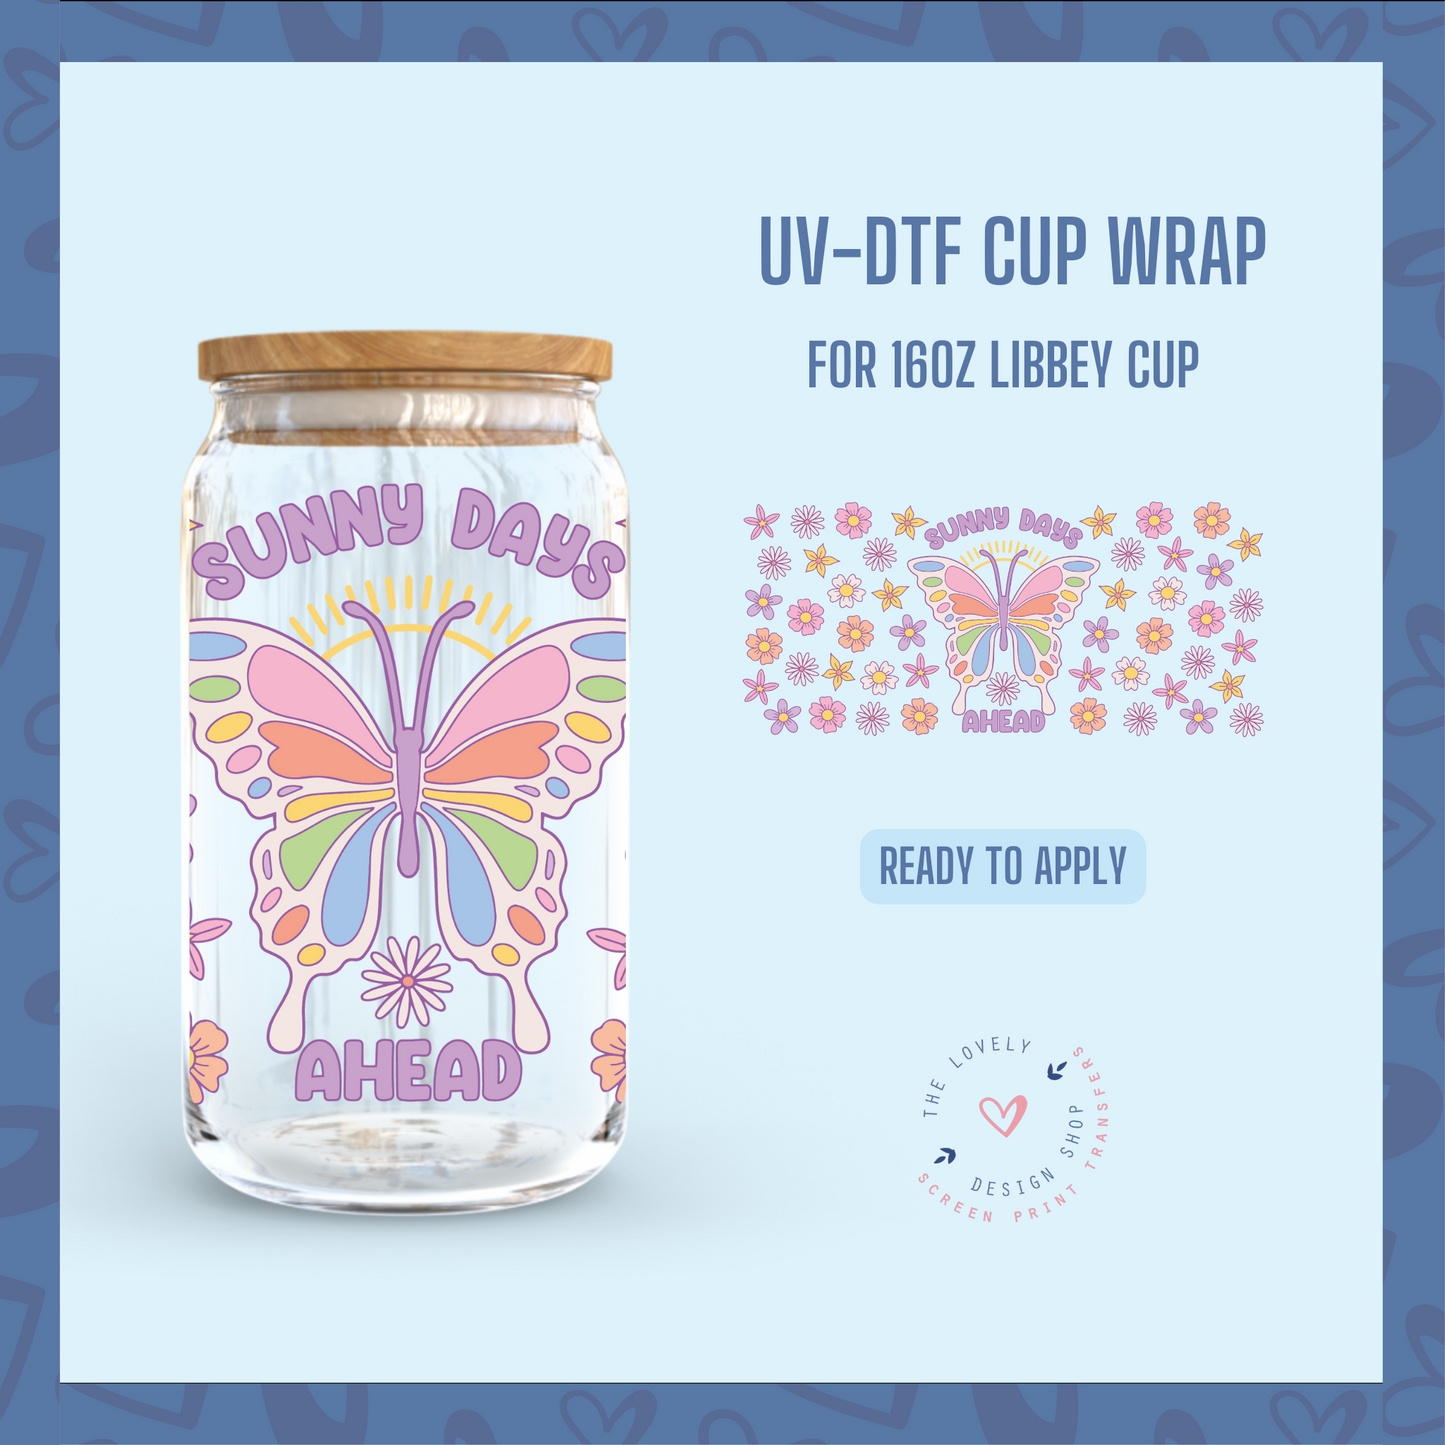 Sunny Days Ahead - UV DTF 16 oz Libbey Cup Wrap (Ready to Ship) Apr 22